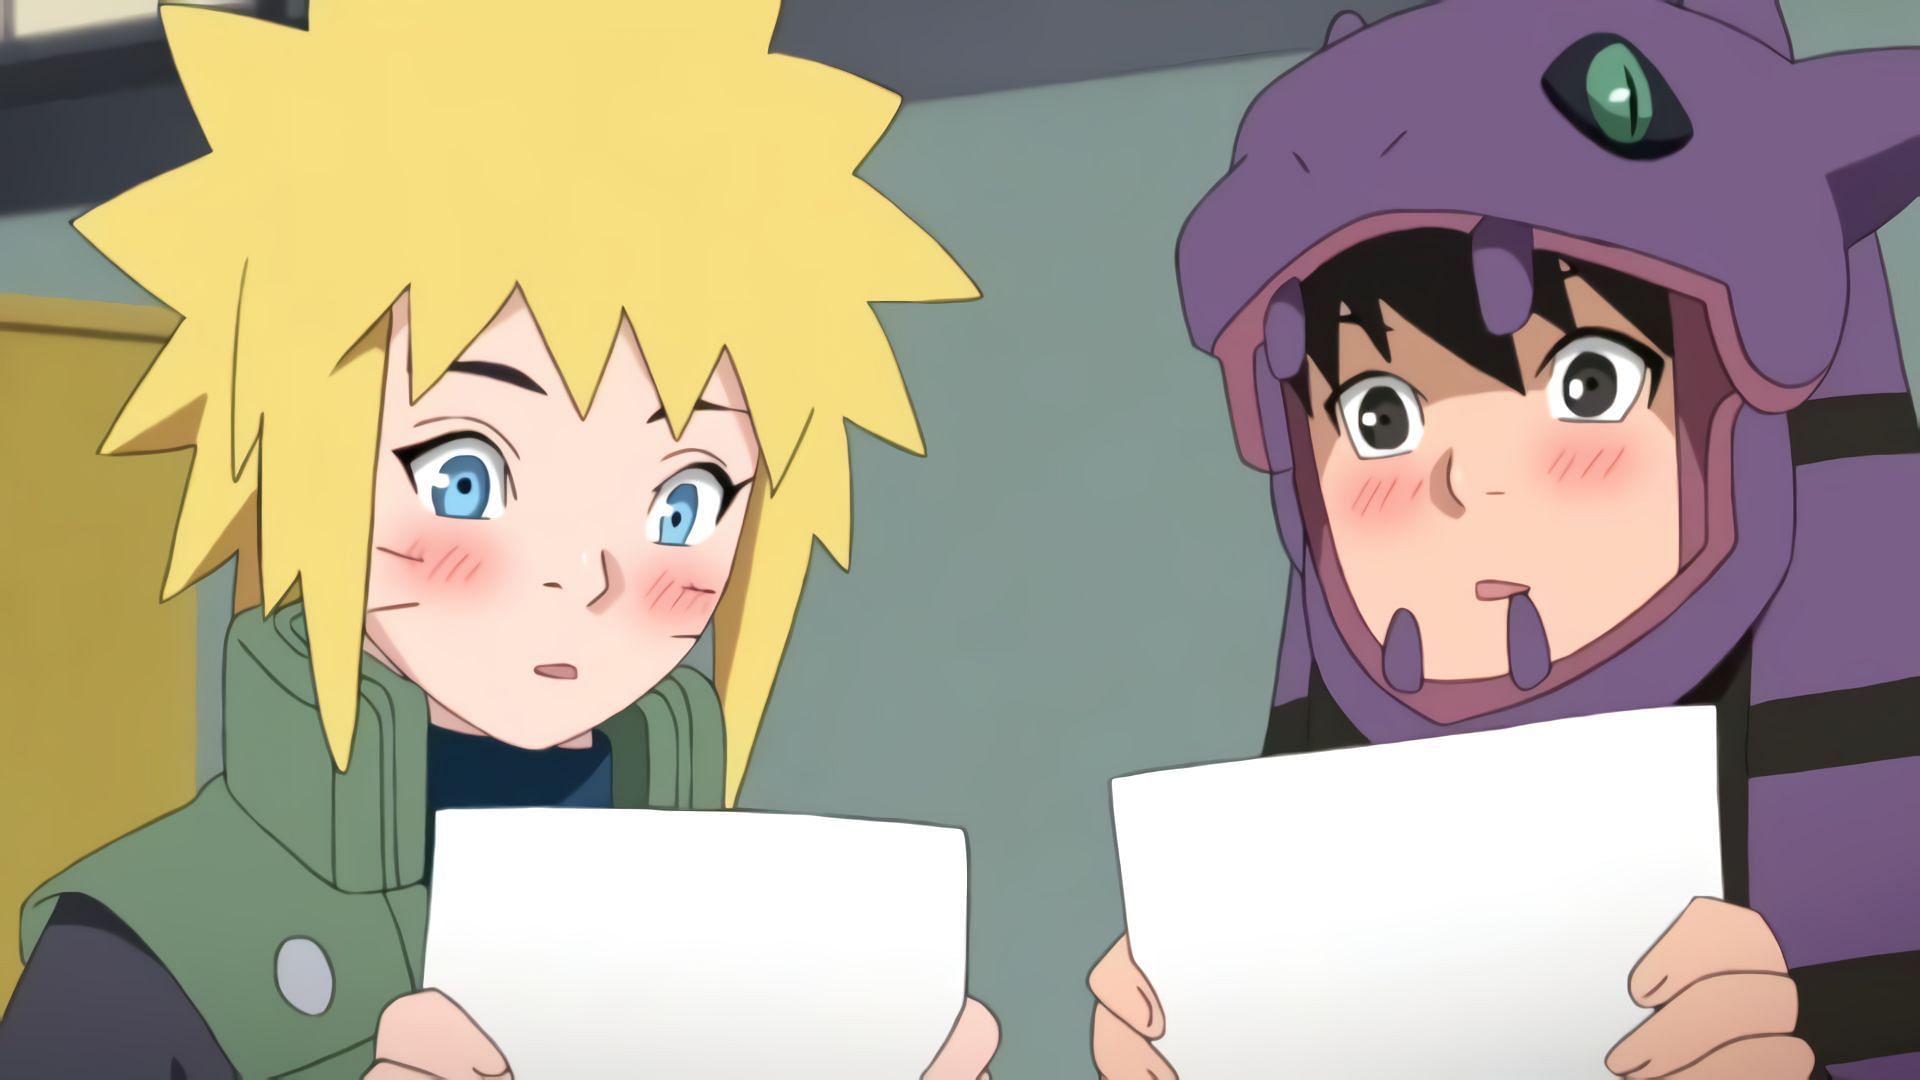 Boruto: Naruto Next Generations #267 - Kawaki's Cover Blown?! (Episode)